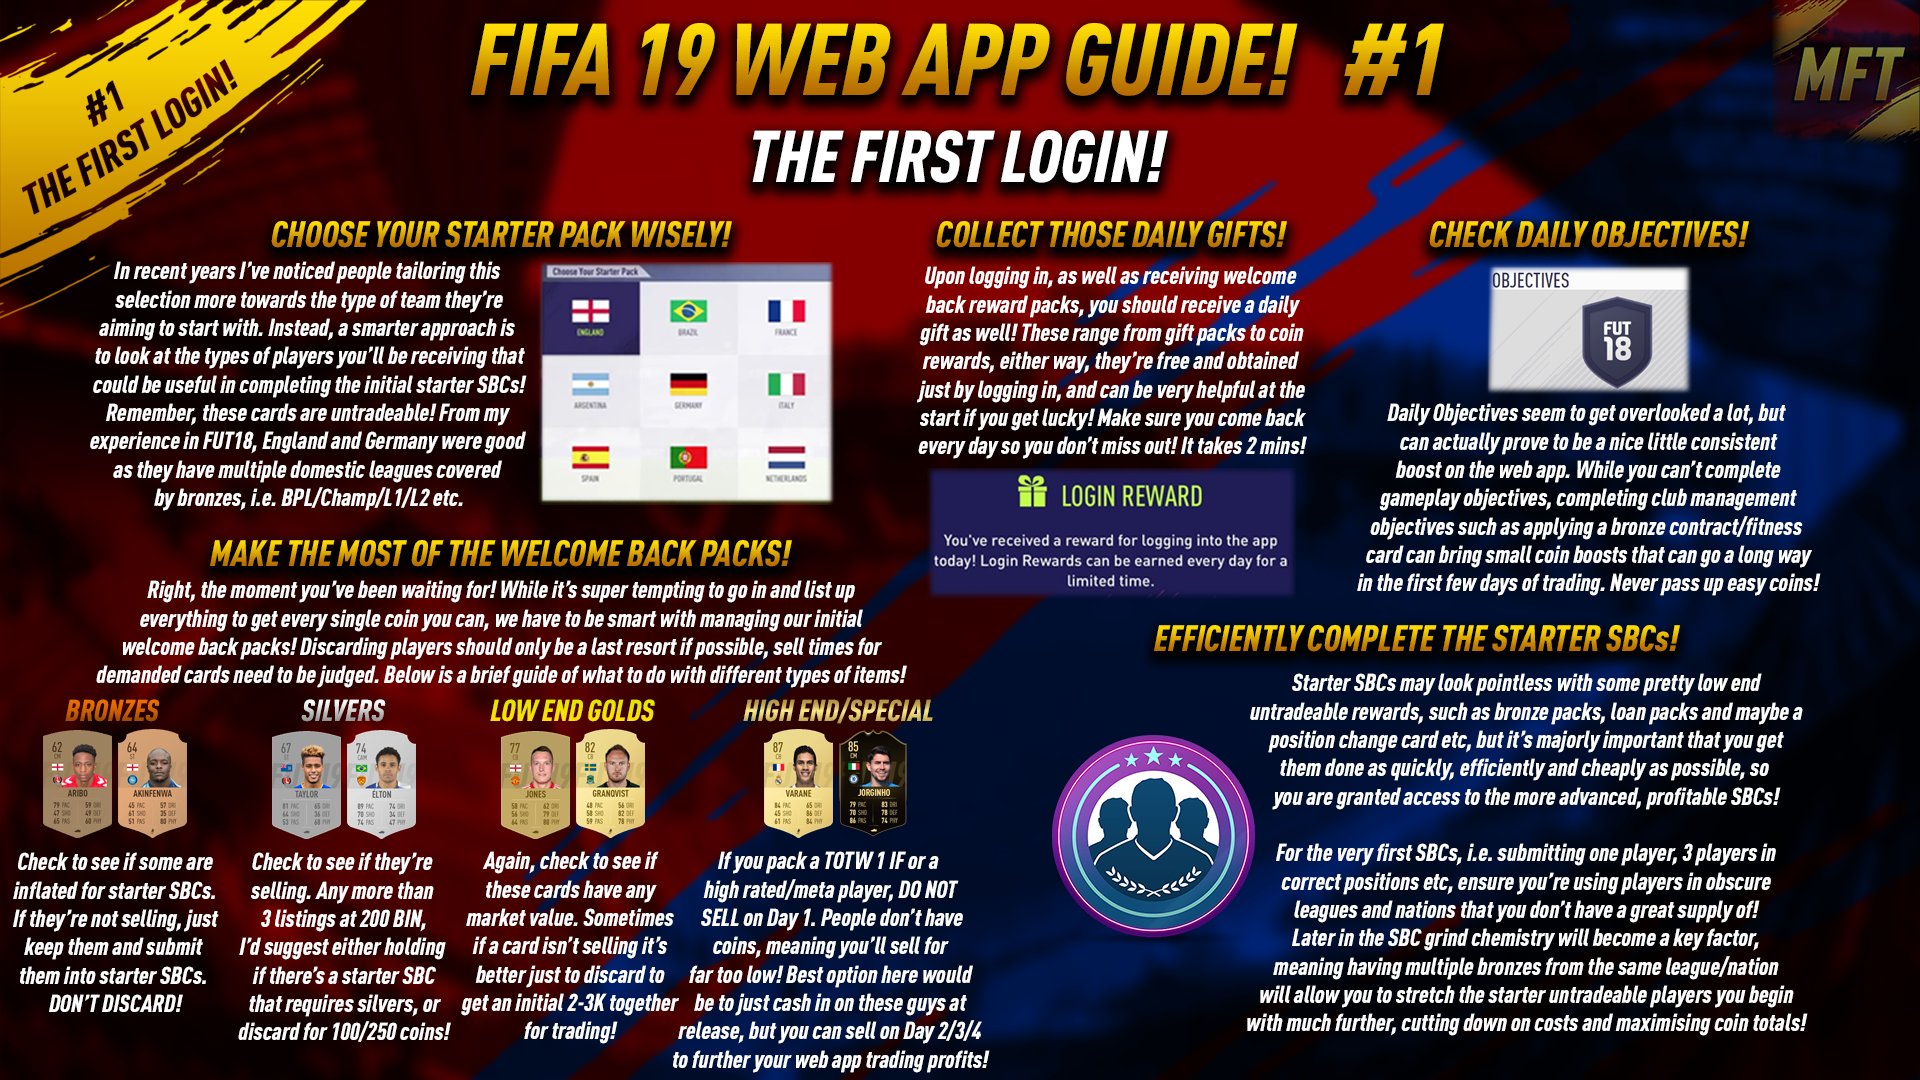 Matt on X: *FIFA 19 WEB APP GUIDE!* The web app season is almost